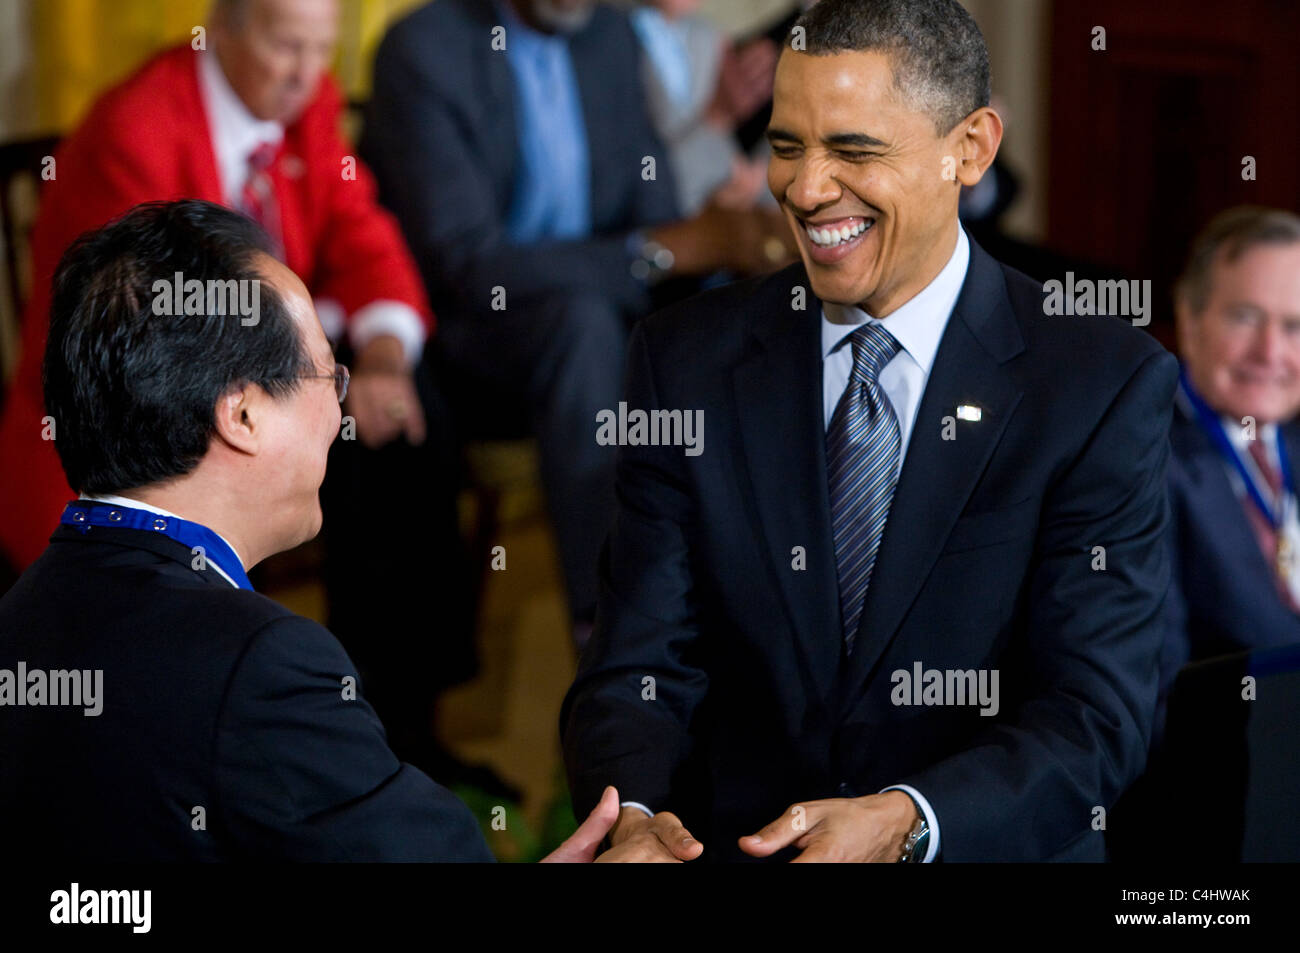 President Barack Obama presents the Presidential Medal of Freedom